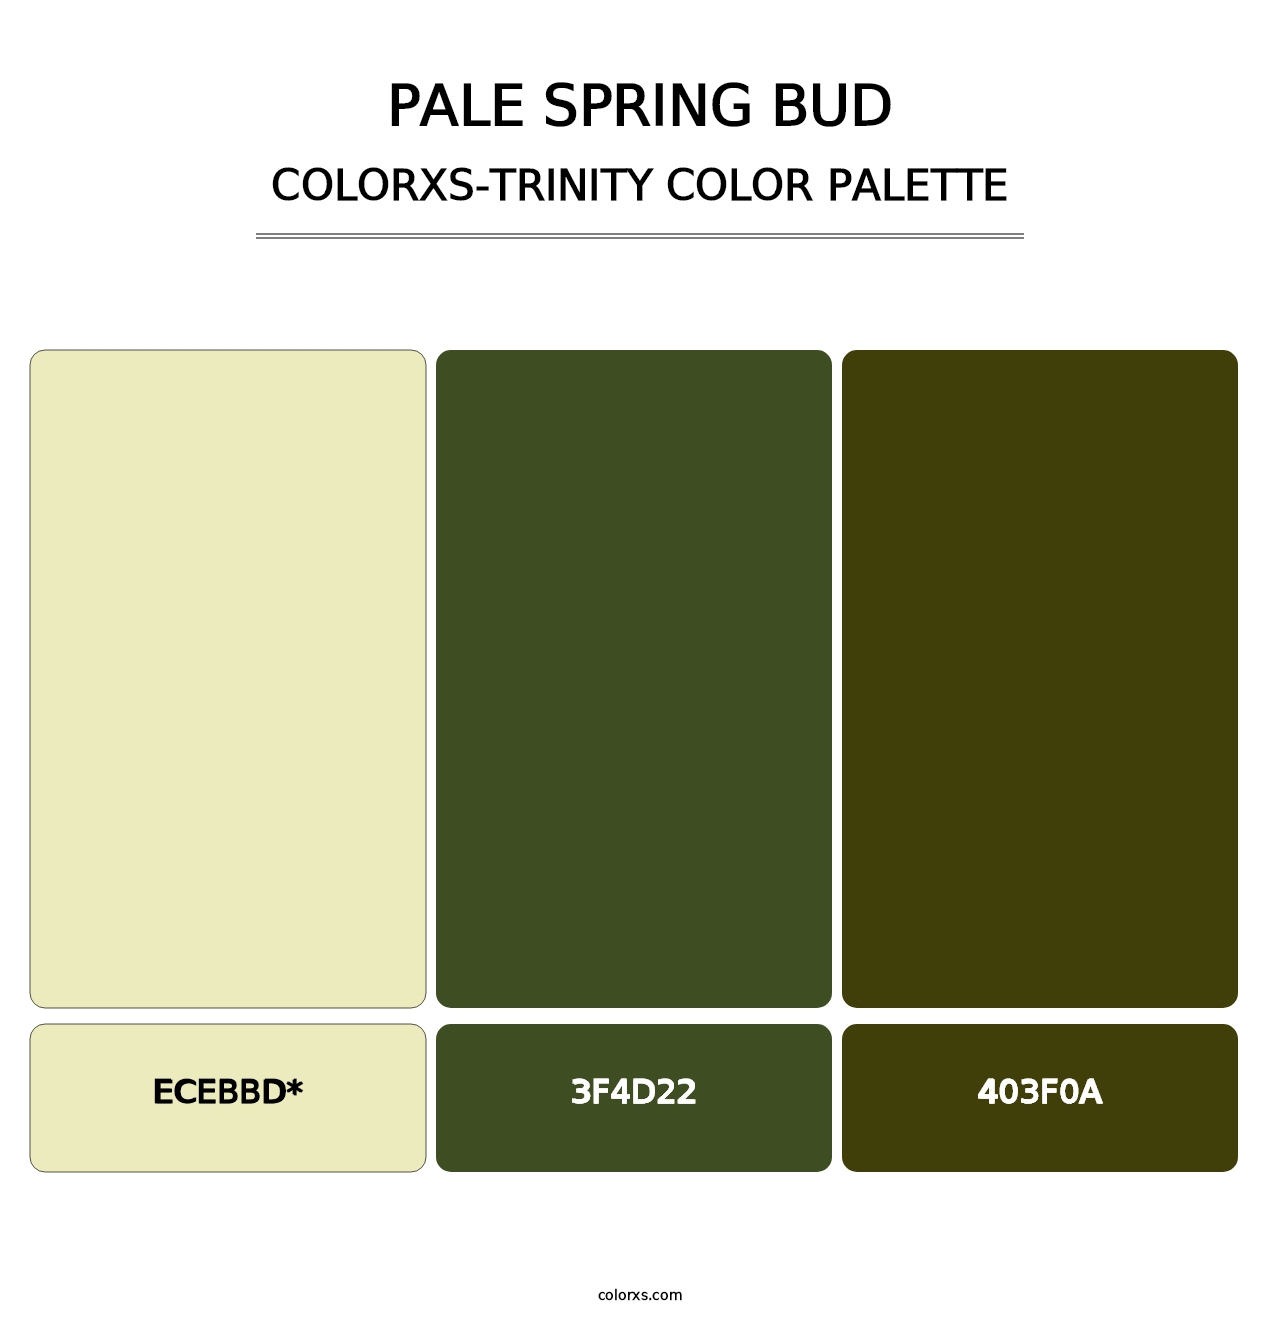 Pale Spring Bud - Colorxs Trinity Palette